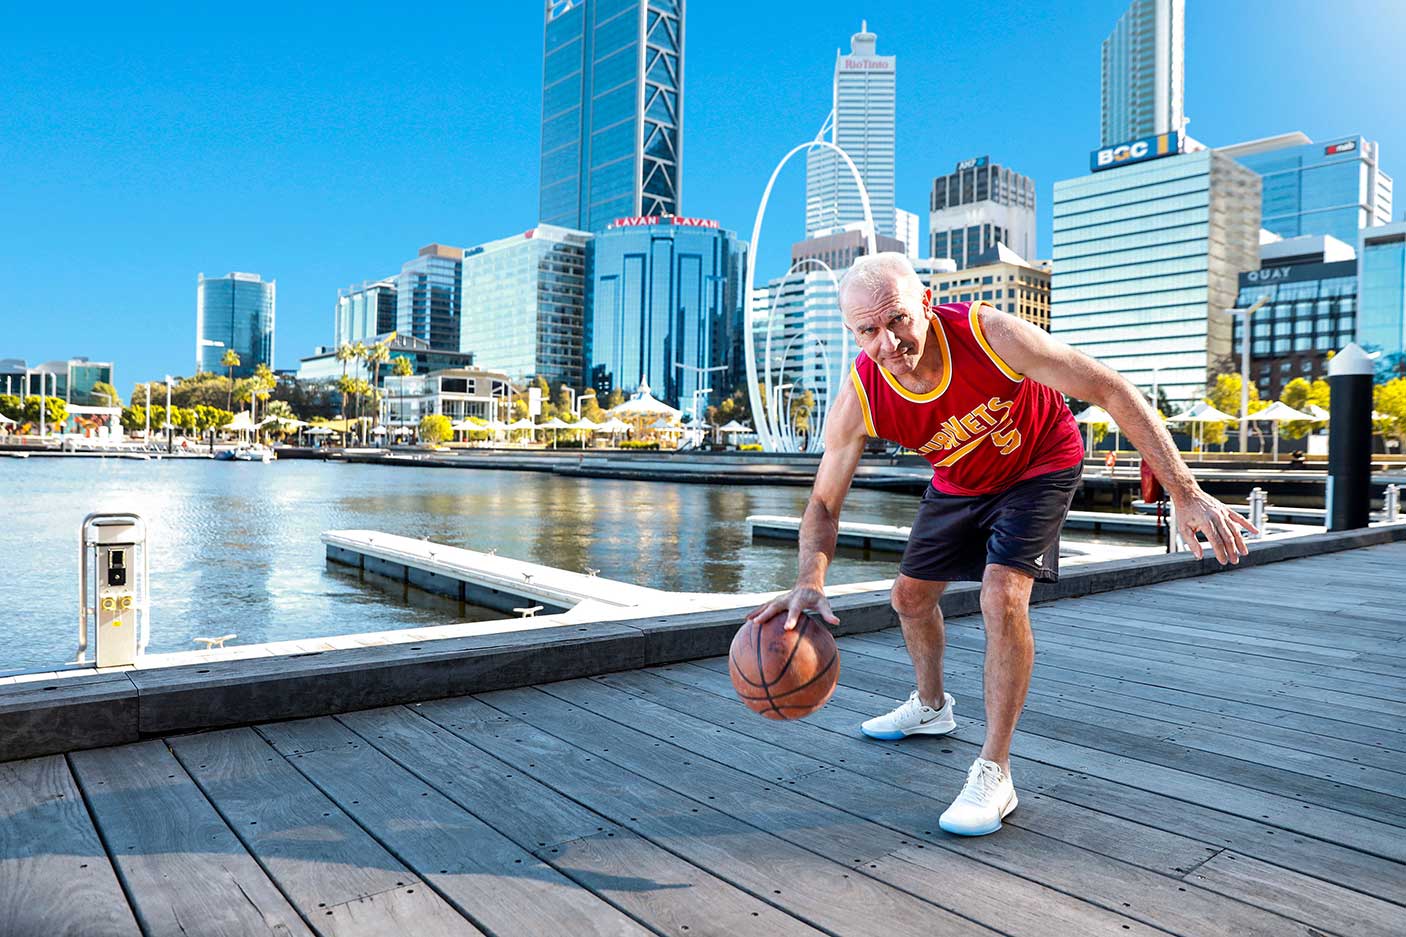 A man dribbling a basketball on a boardwalk in Perth